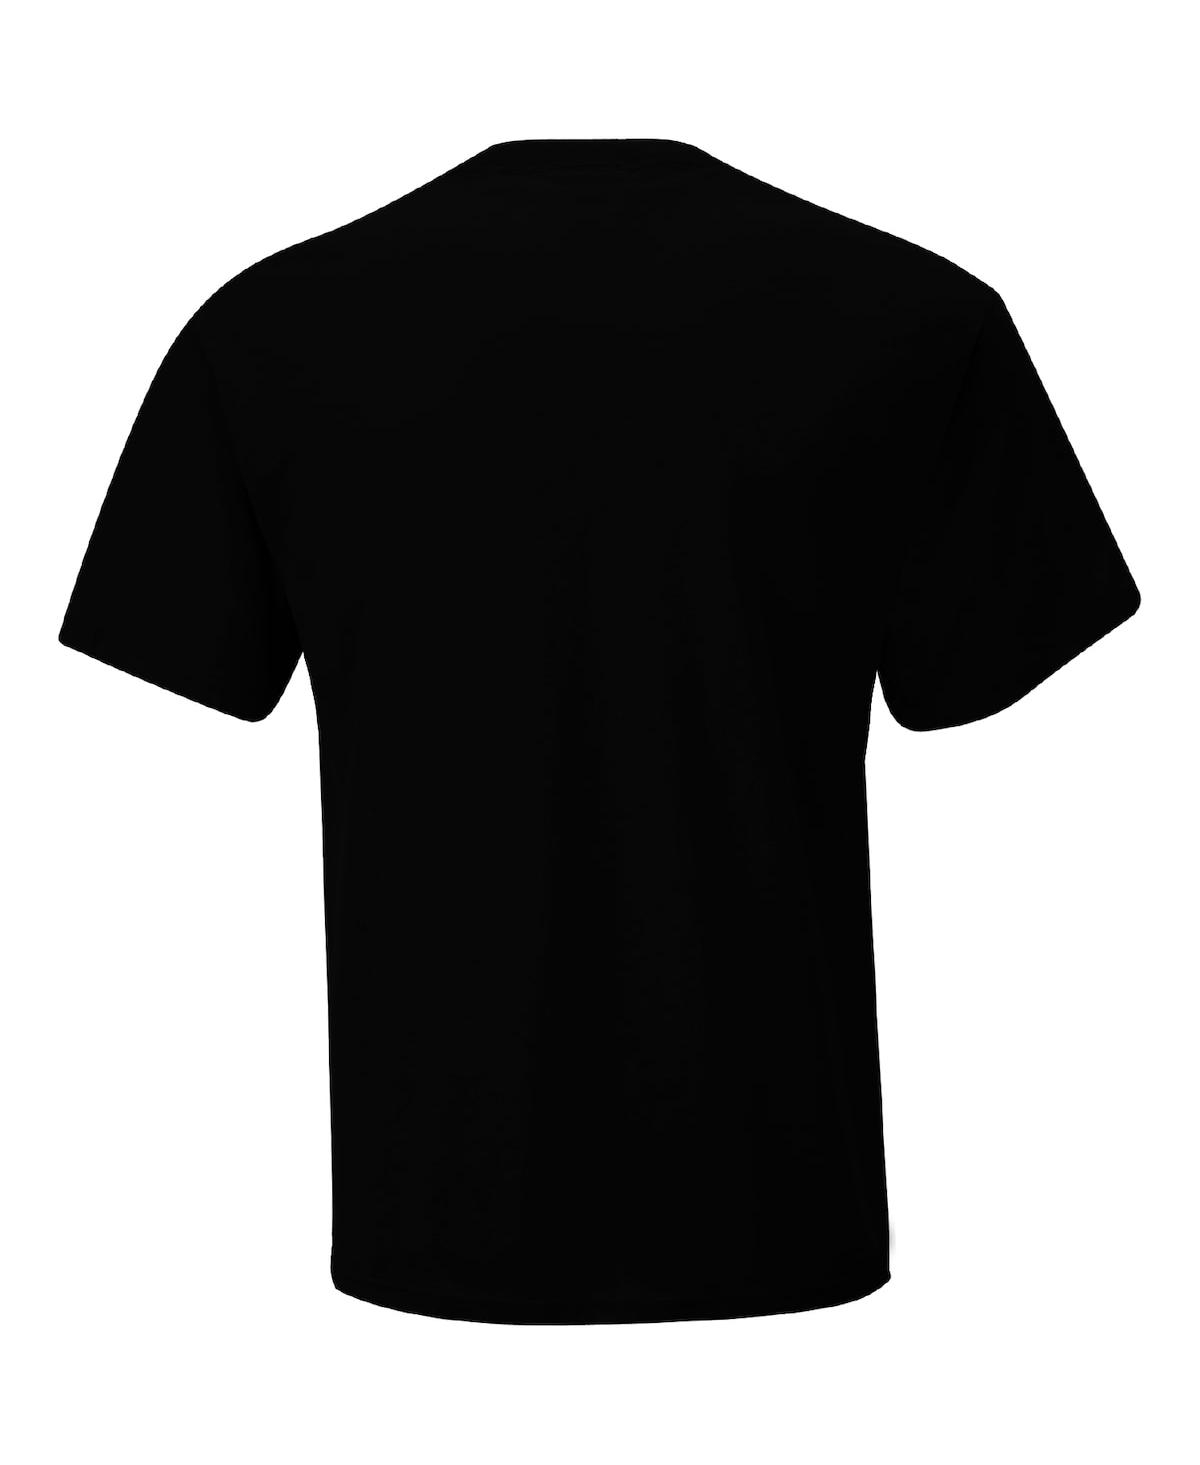 Shop Joe Gibbs Racing Team Collection Men's  Black Martin Truex Jr Speed T-shirt